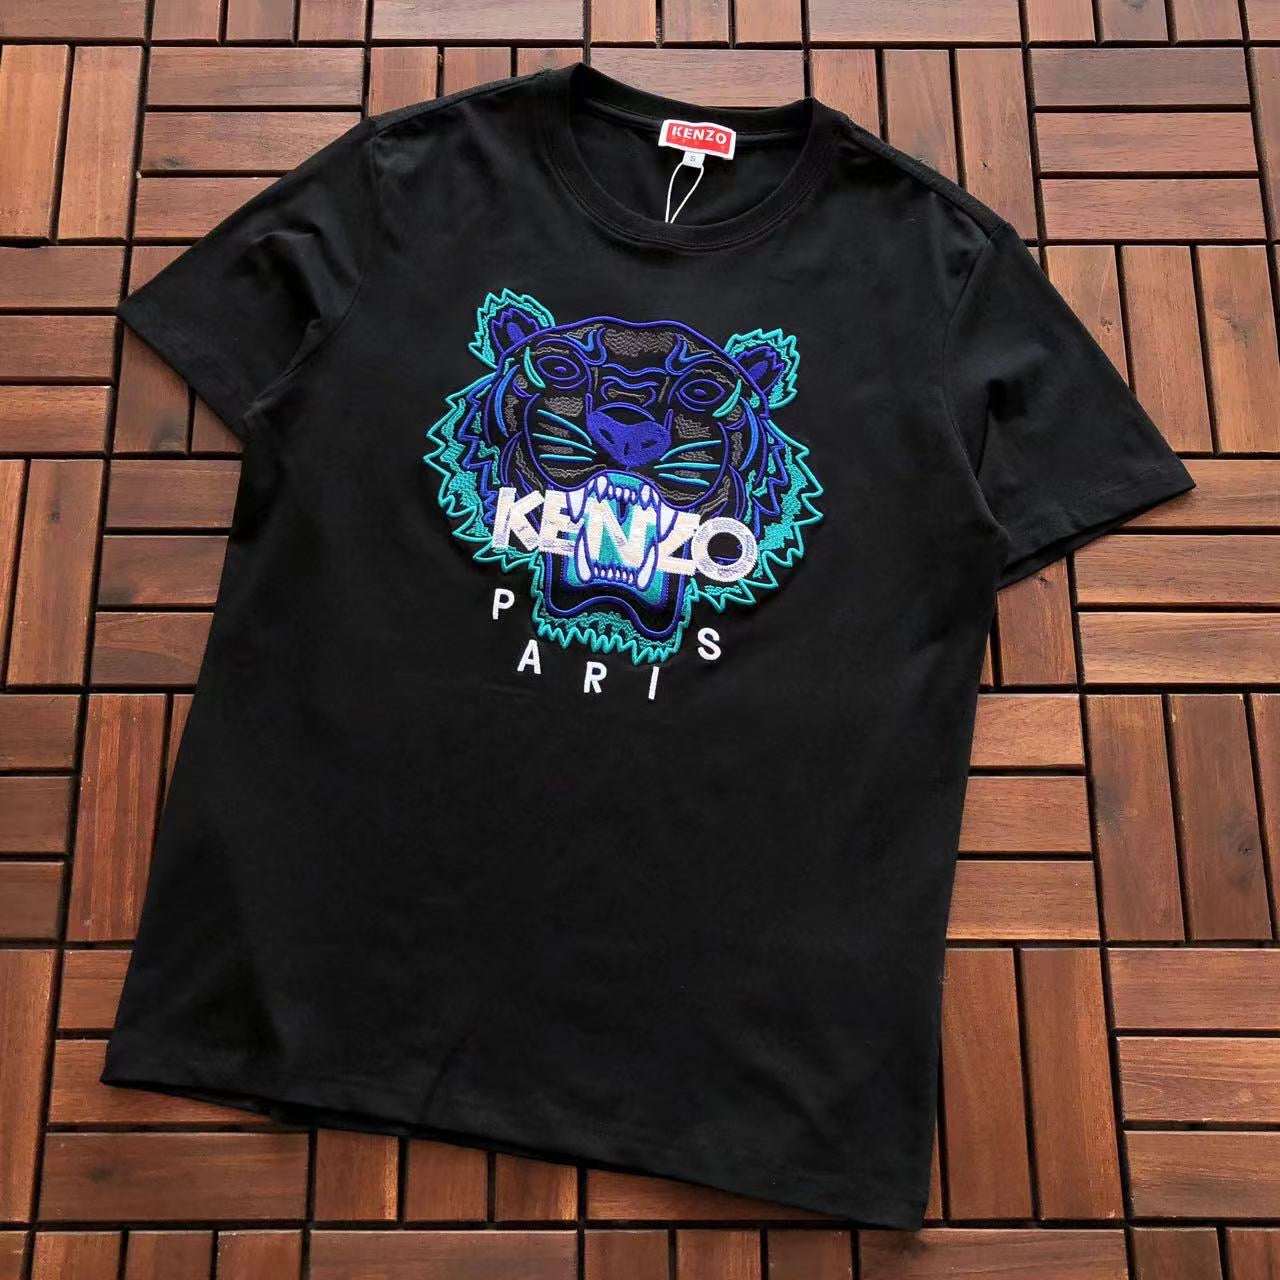 Camiseta Kenzo